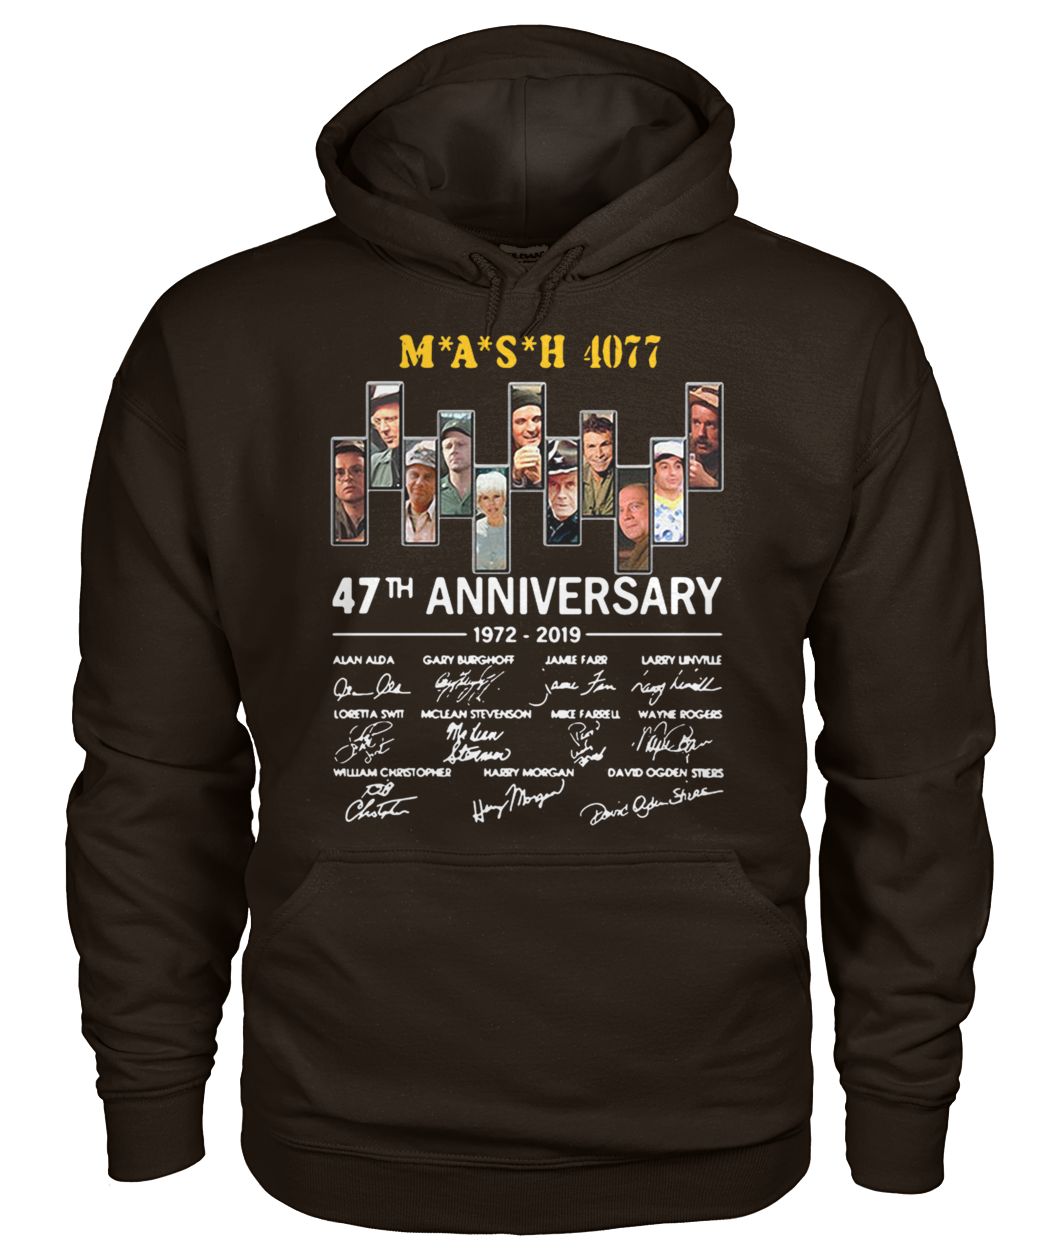 Mash 4077 47th anniversary 1972 2019 signatures gildan hoodie